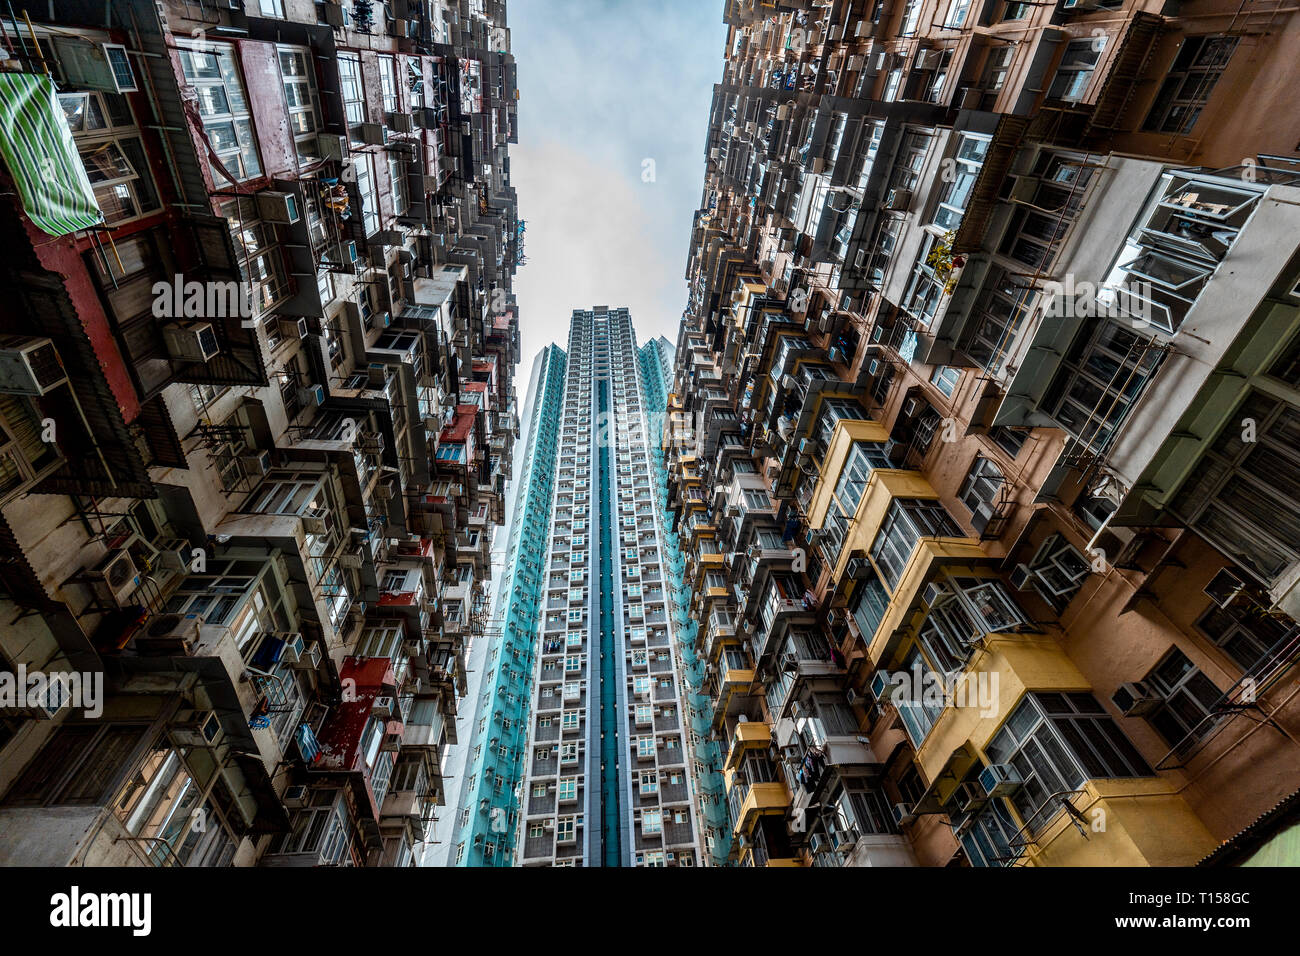 Hong Kong, Quarry Bay, apartment blocks contrasting with modern skyscraper Stock Photo